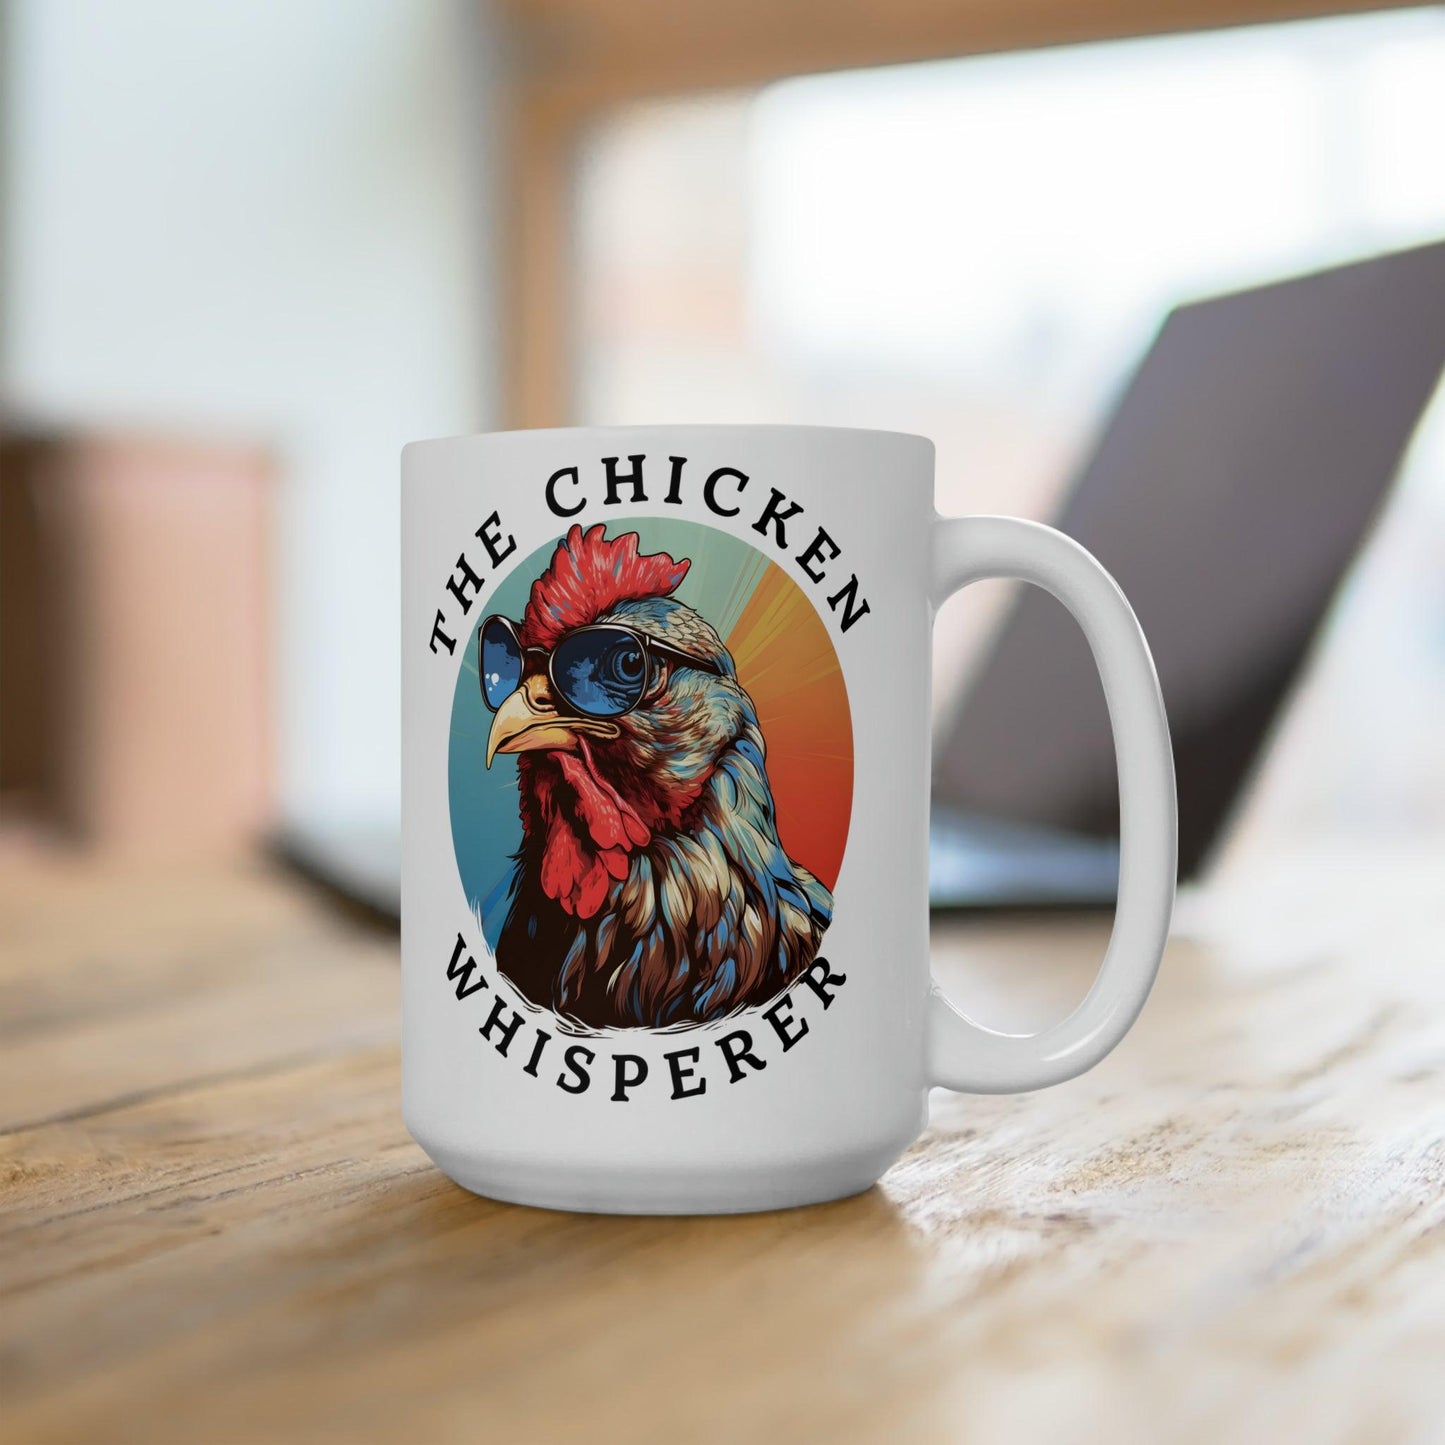 Chicken Whisperer Mug Chicken Coffee Mug Chicken lovers Mug Funny Chicken Cup Roster Mug Retro Vintage coffee Mug